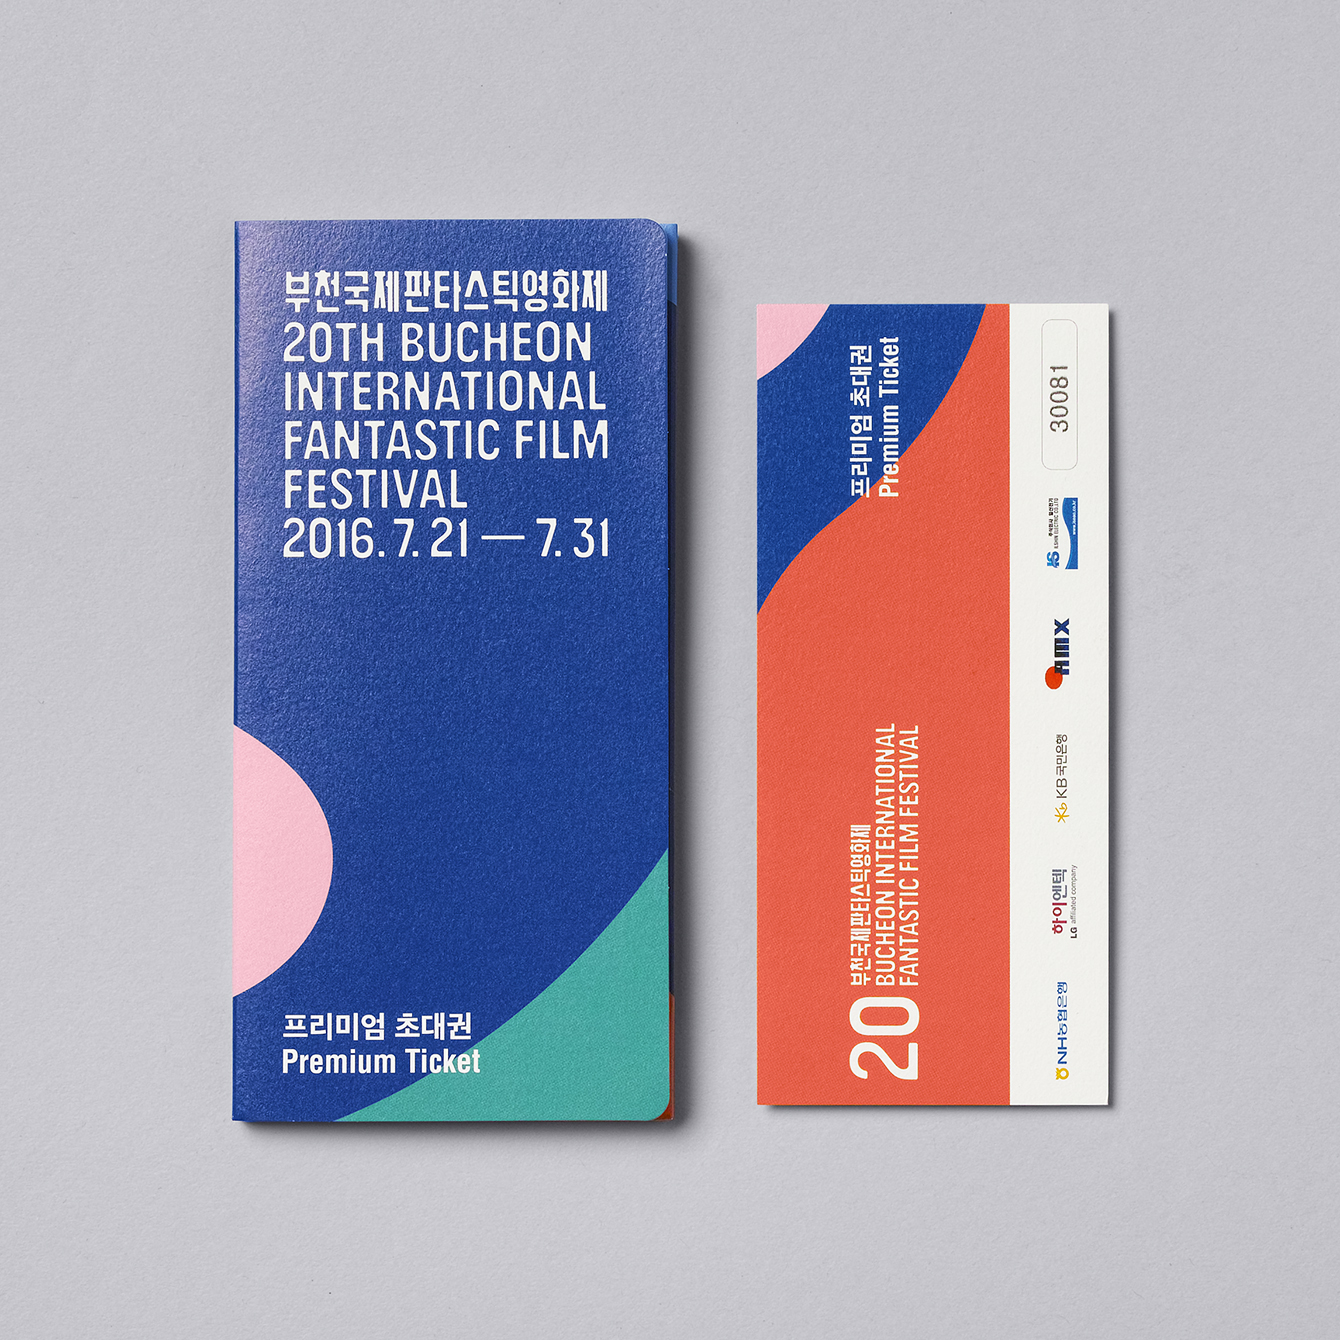 Brand identity and tickets by Studio fnt for 20th Bucheon International Fantastic Film Festival, South Korea